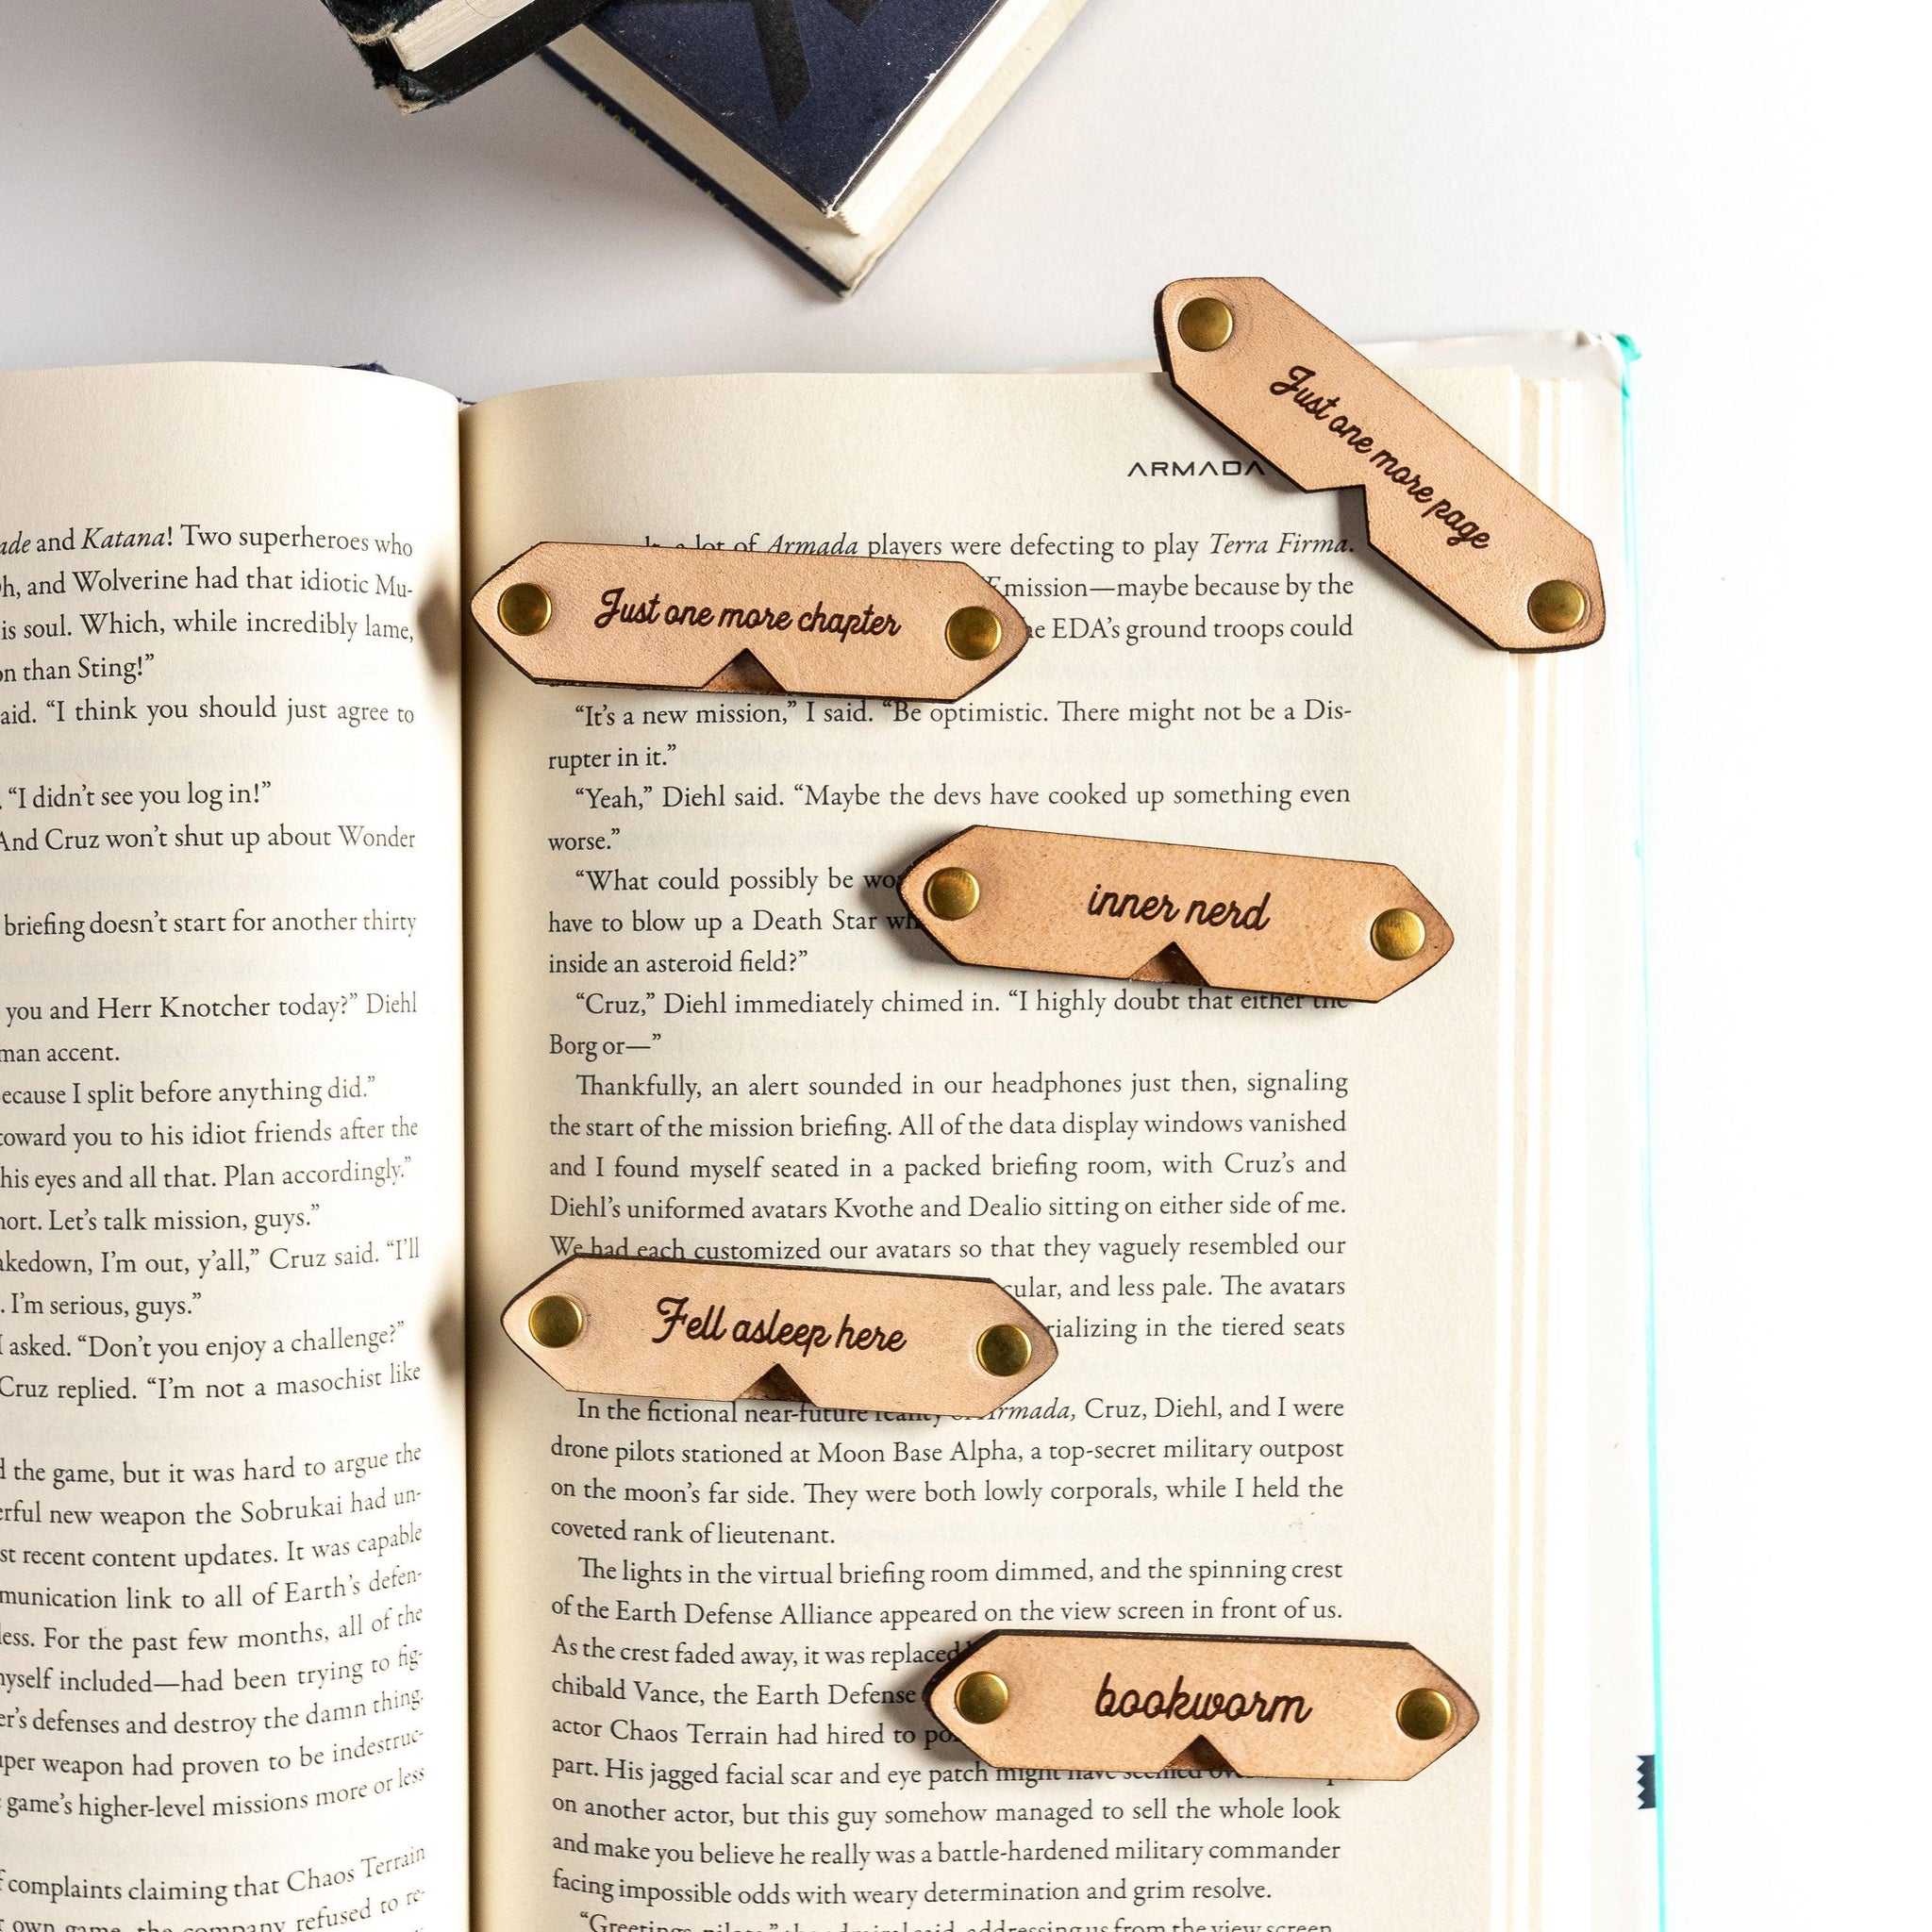 Custom (phrase) Corner Leather Bookmark - Espacio Handmade